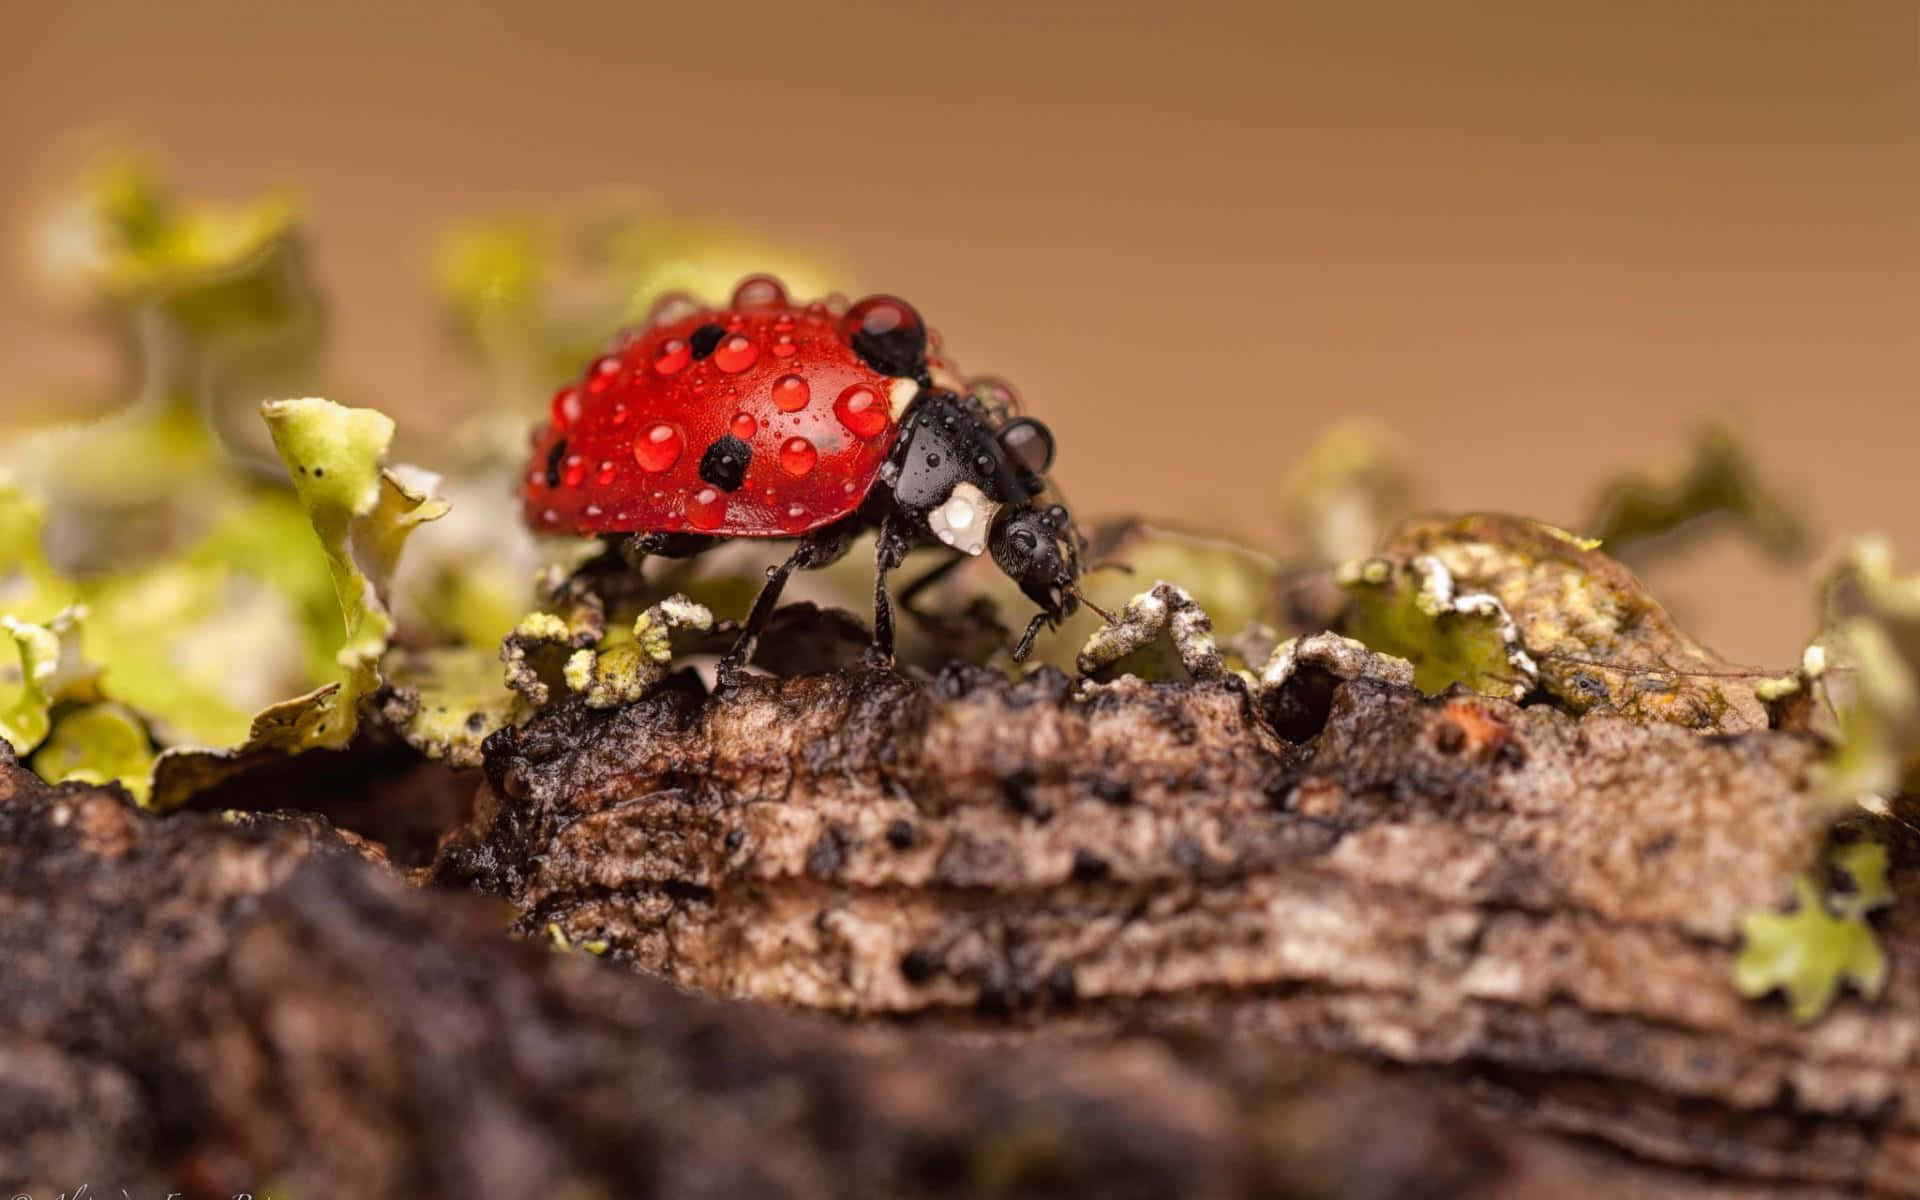 'The Beauty of the Ladybug'